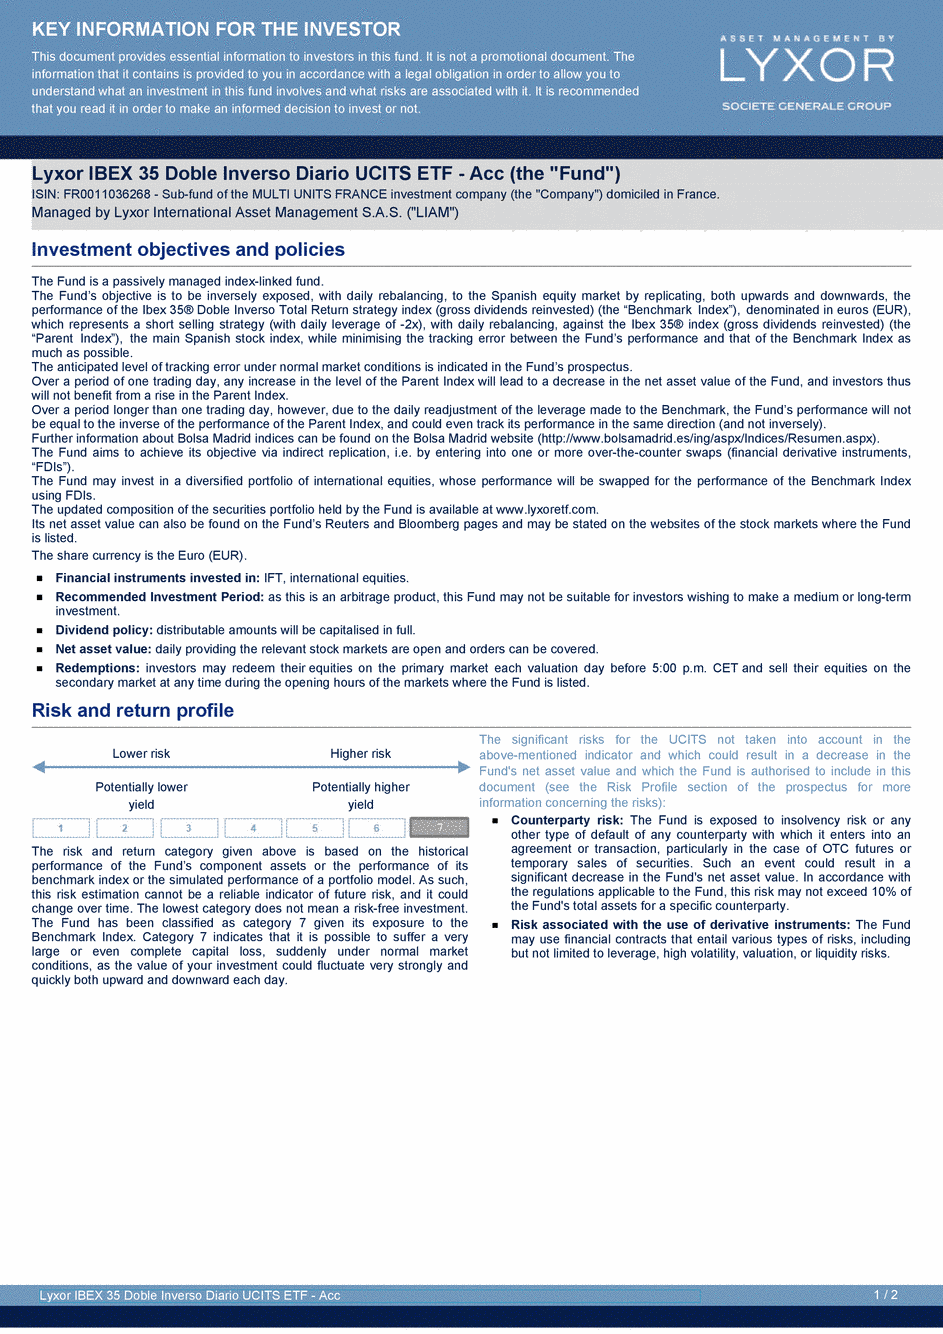 DICI Lyxor IBEX 35 Doble Inverso Diario UCITS ETF - Acc - 19/02/2021 - Anglais